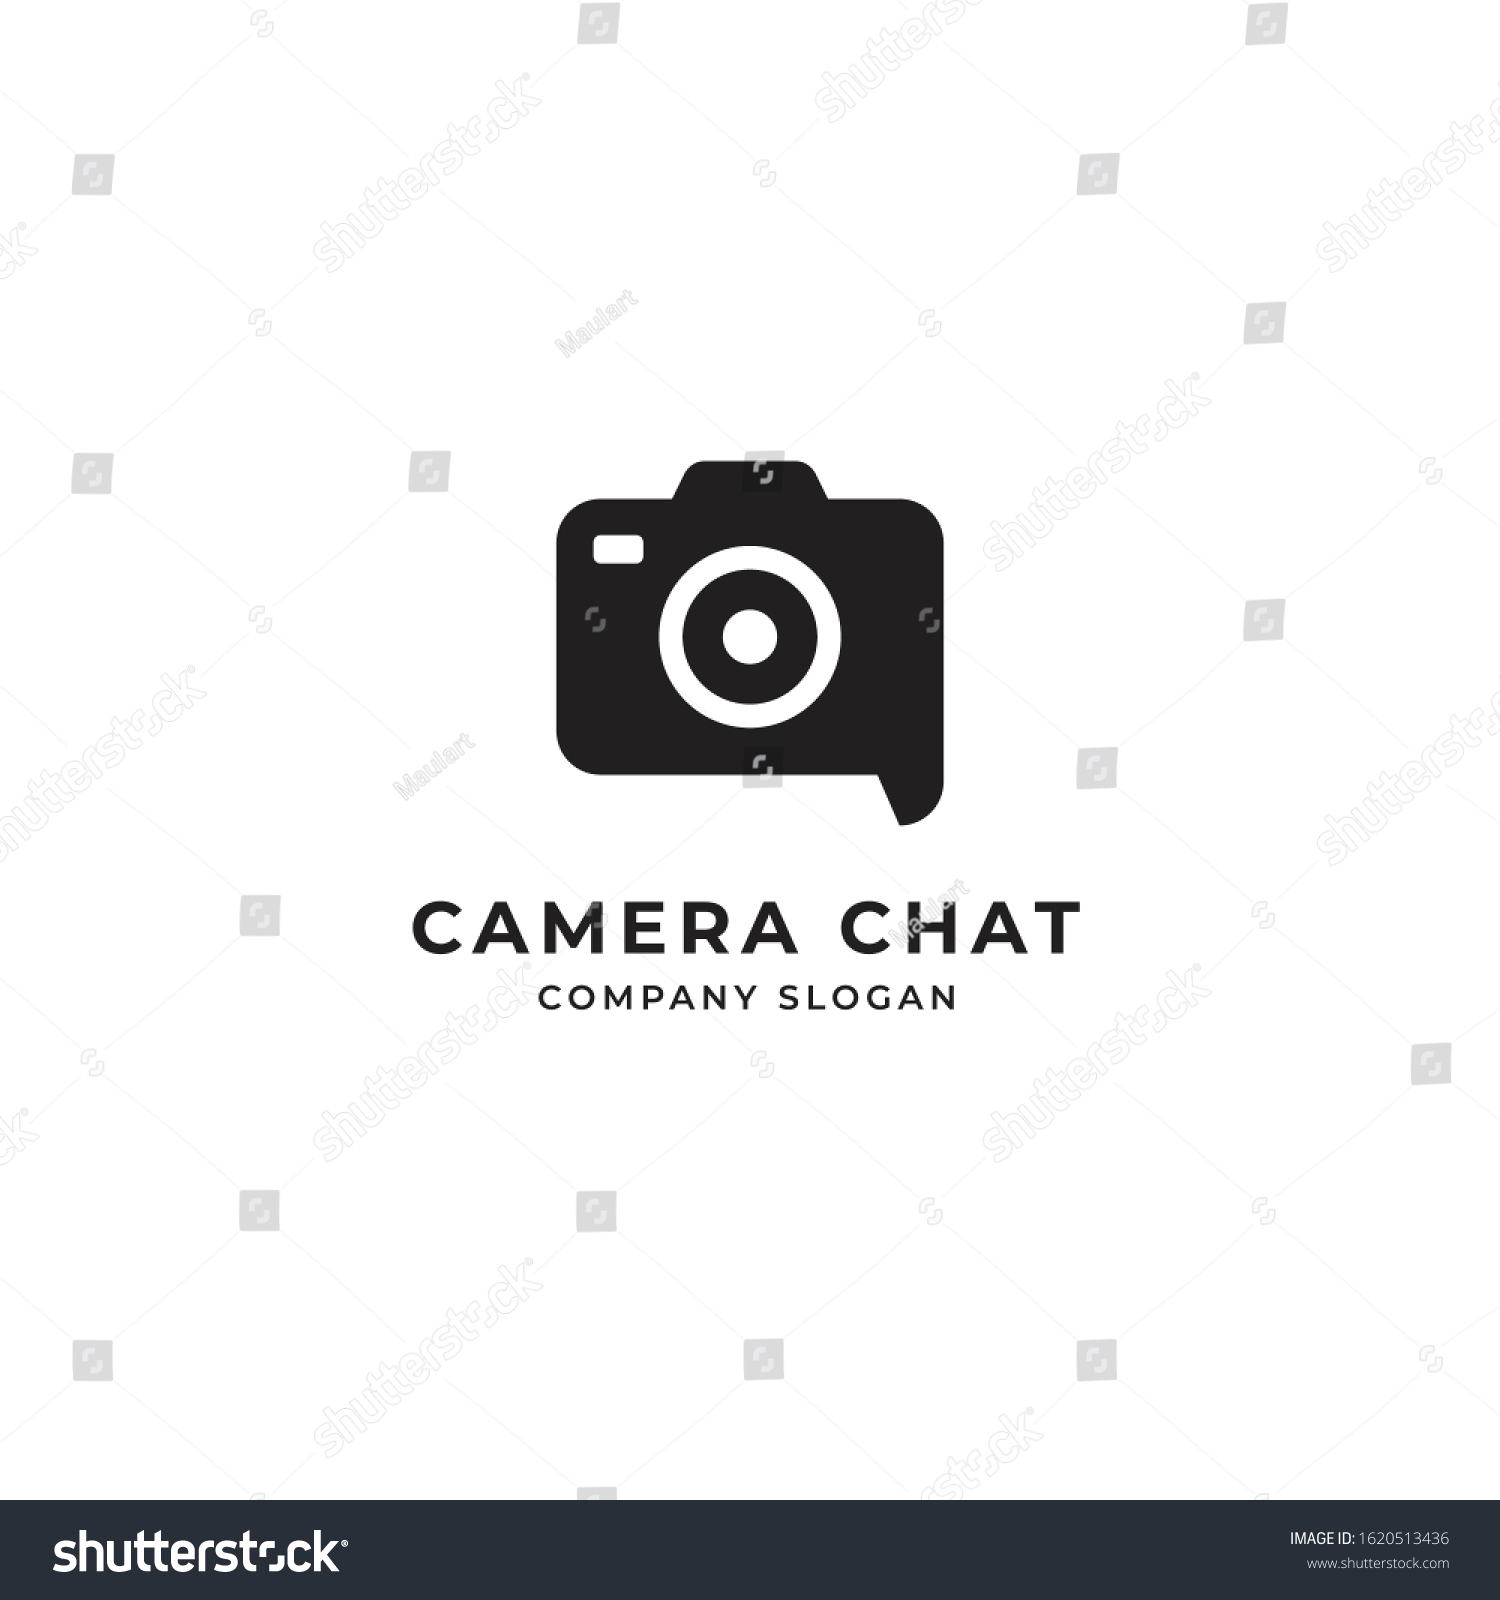 Camera chat